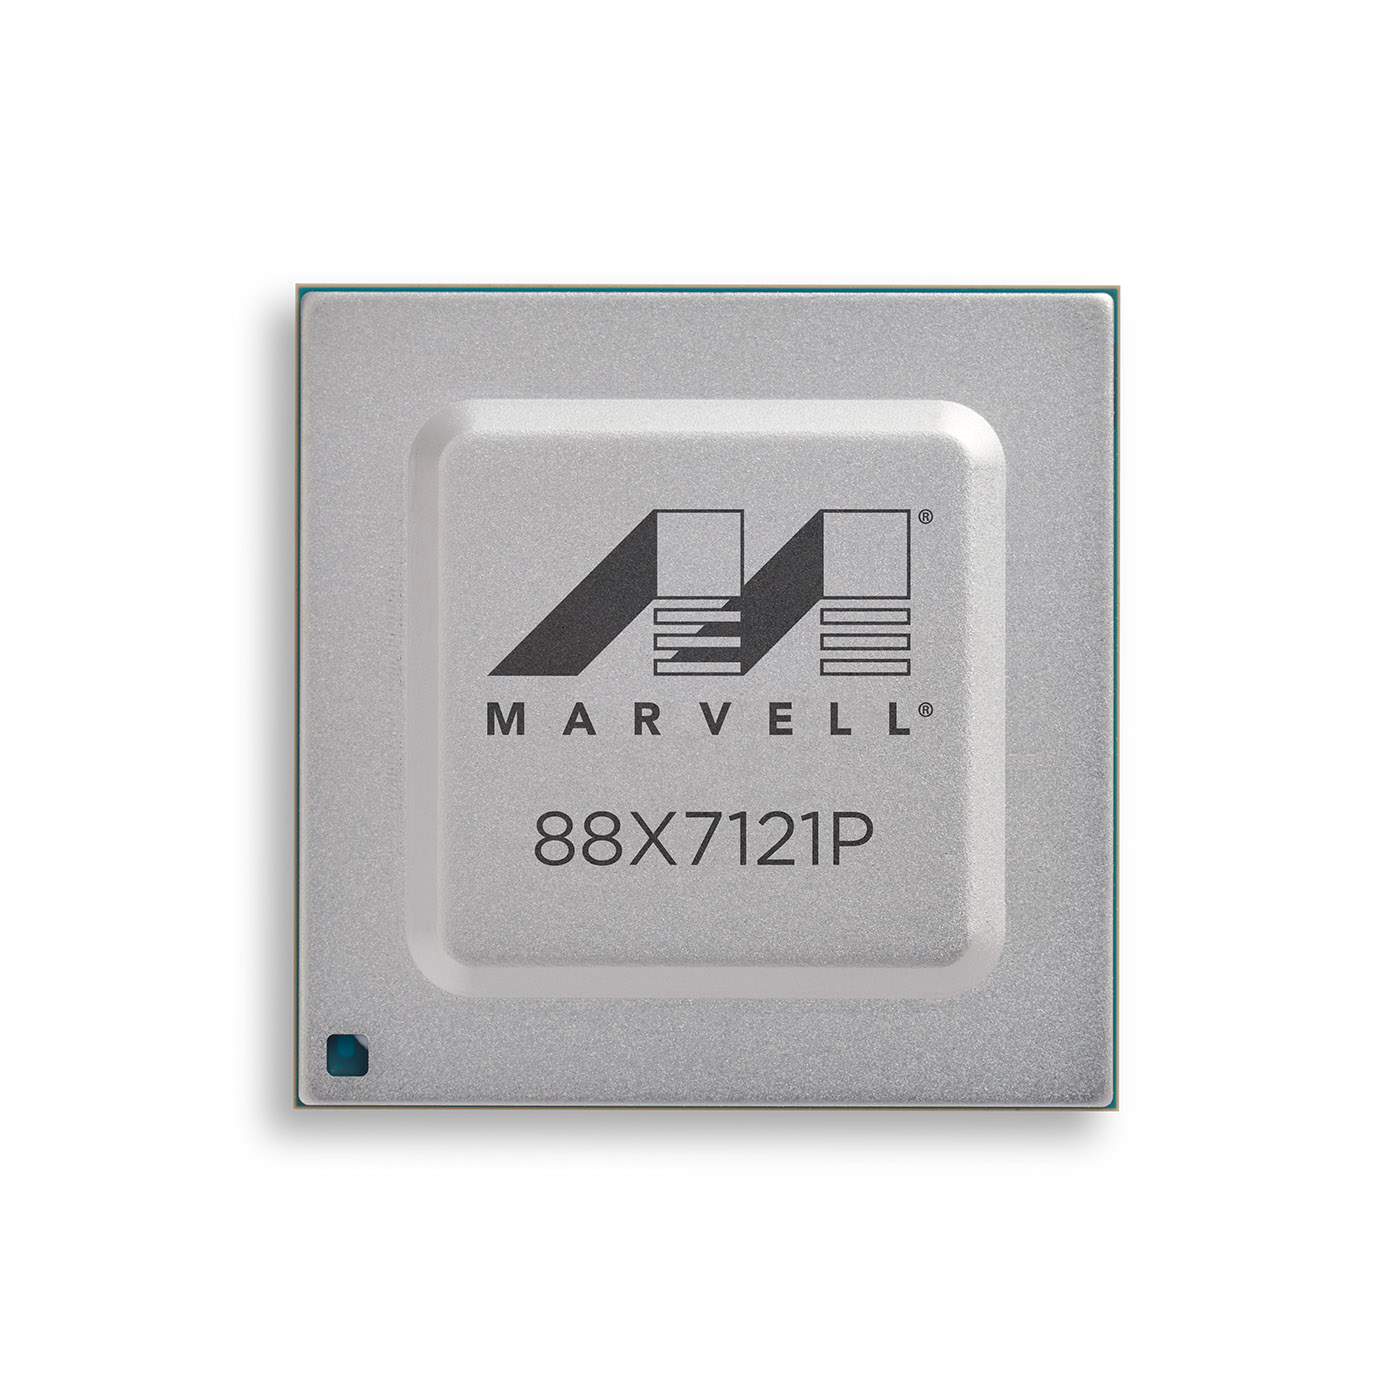 Marvell发布面向数据中心和5G基础设施的双端口400GbE MACsec PHY